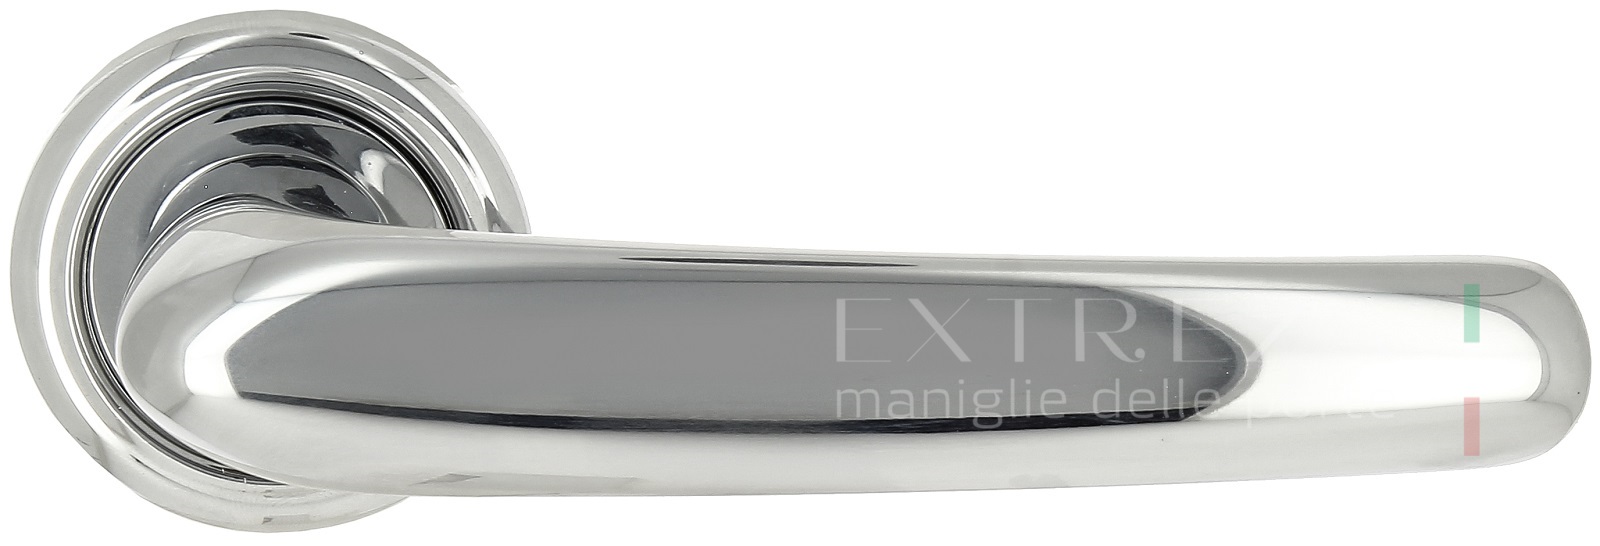 Ручка дверная Extreza MONACO (Монако) 330 на розетке R01 полированный хром F04